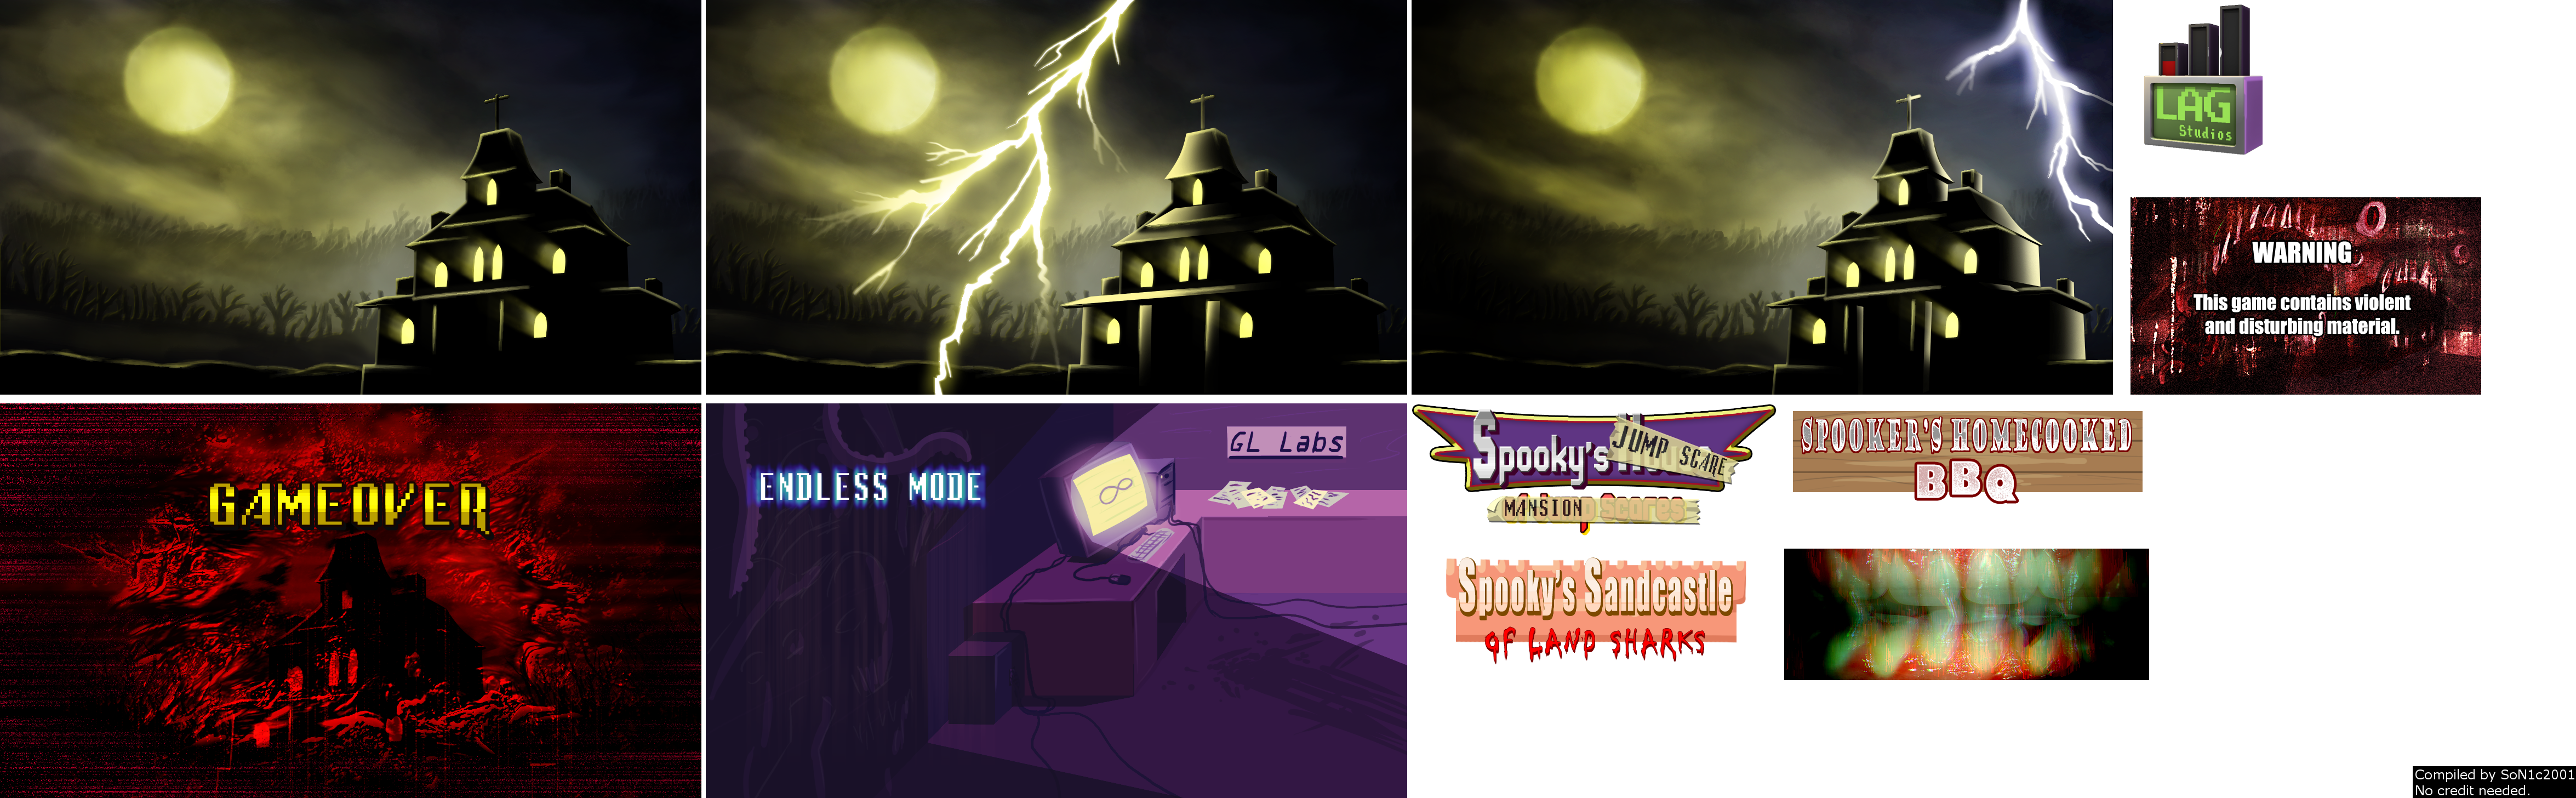 Spooky's Jump Scare Mansion - Menu Images